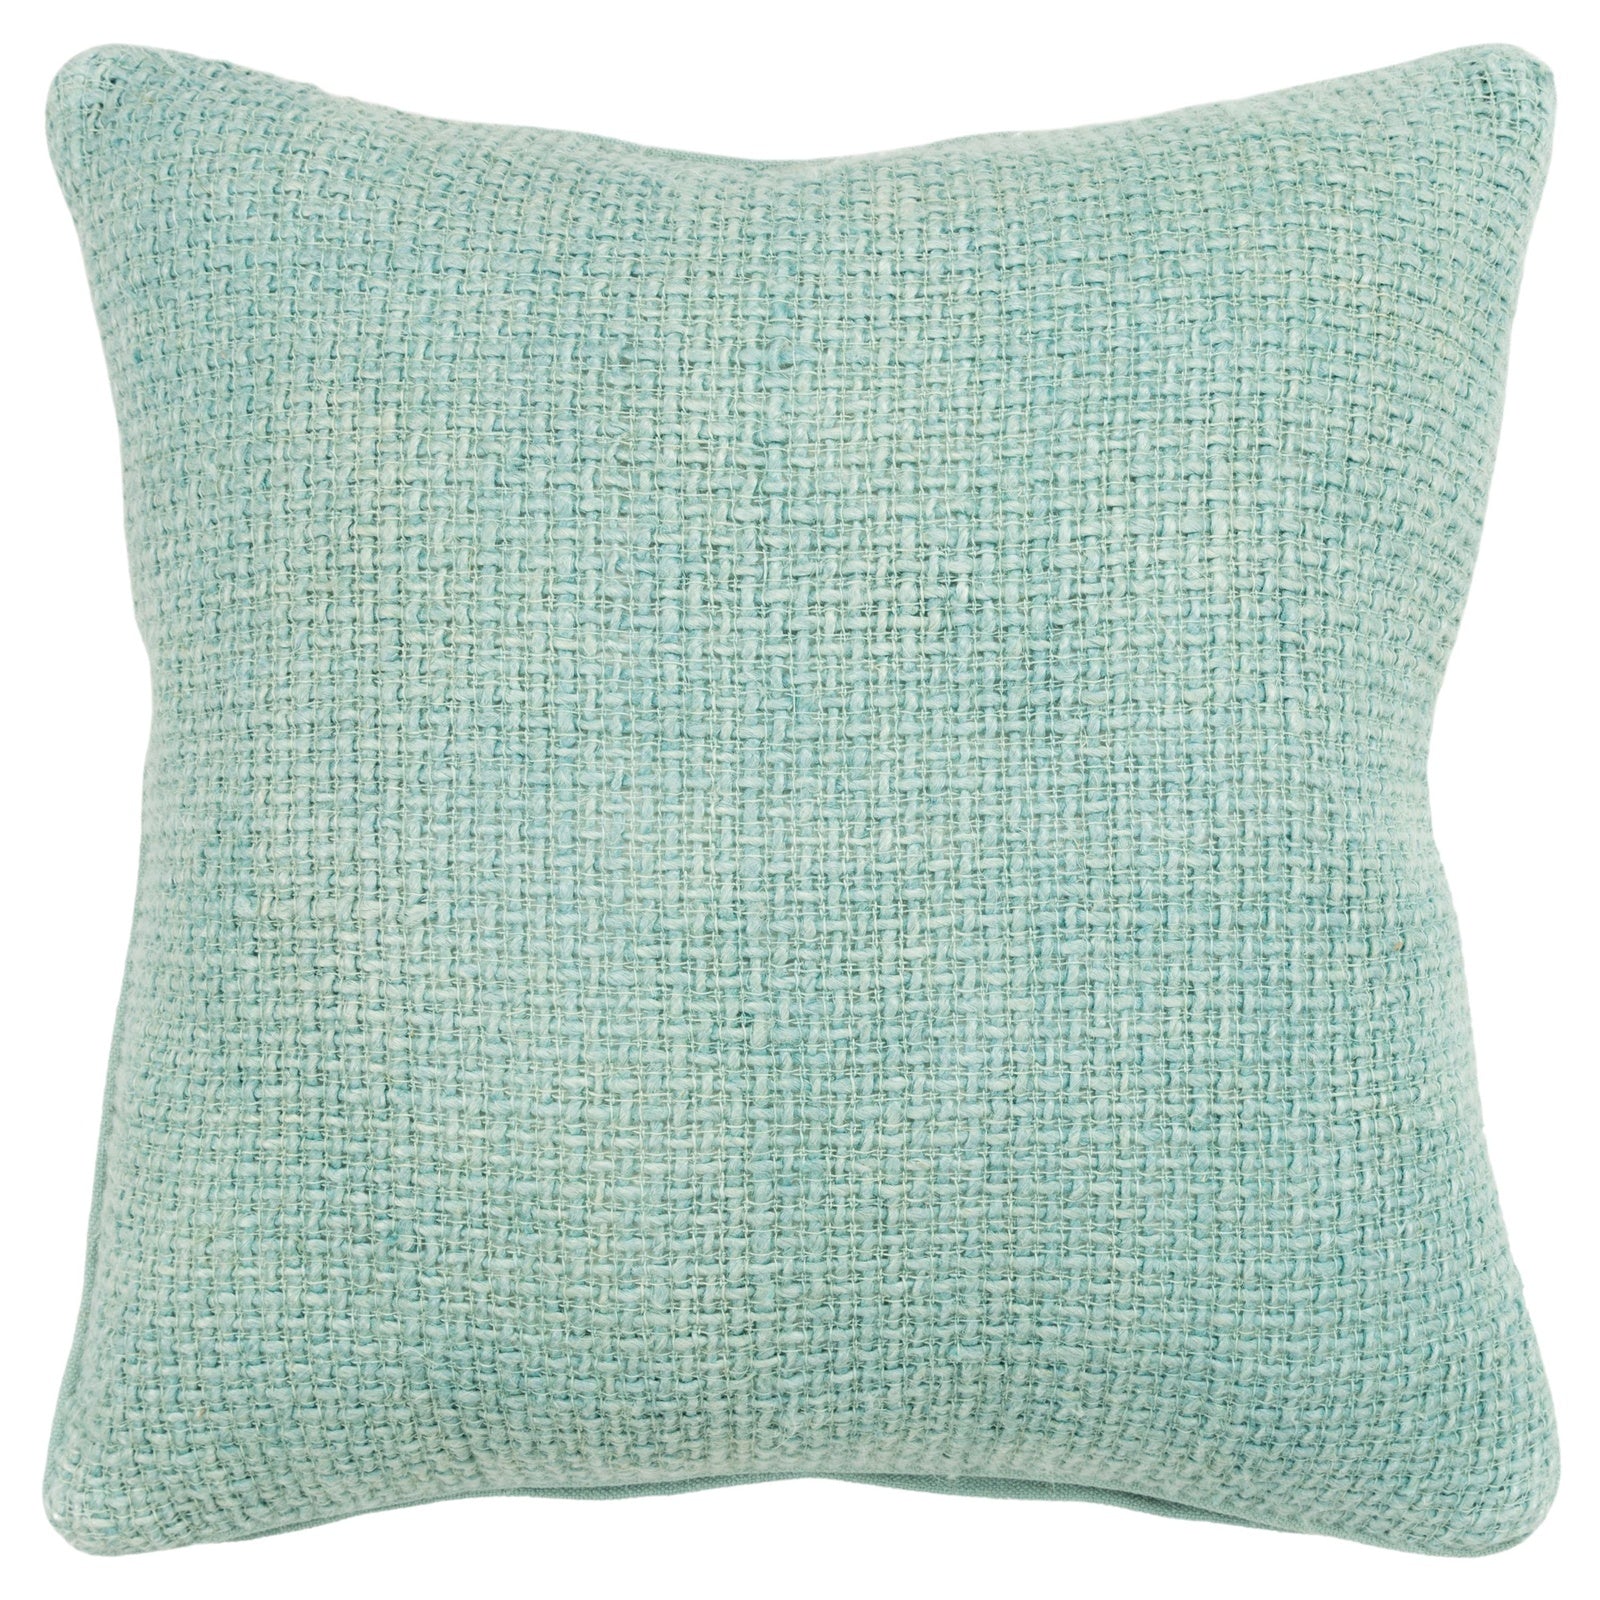 Woven Linen Solid Donny Osmond Decorative Throw Pillow - Decorative Pillows